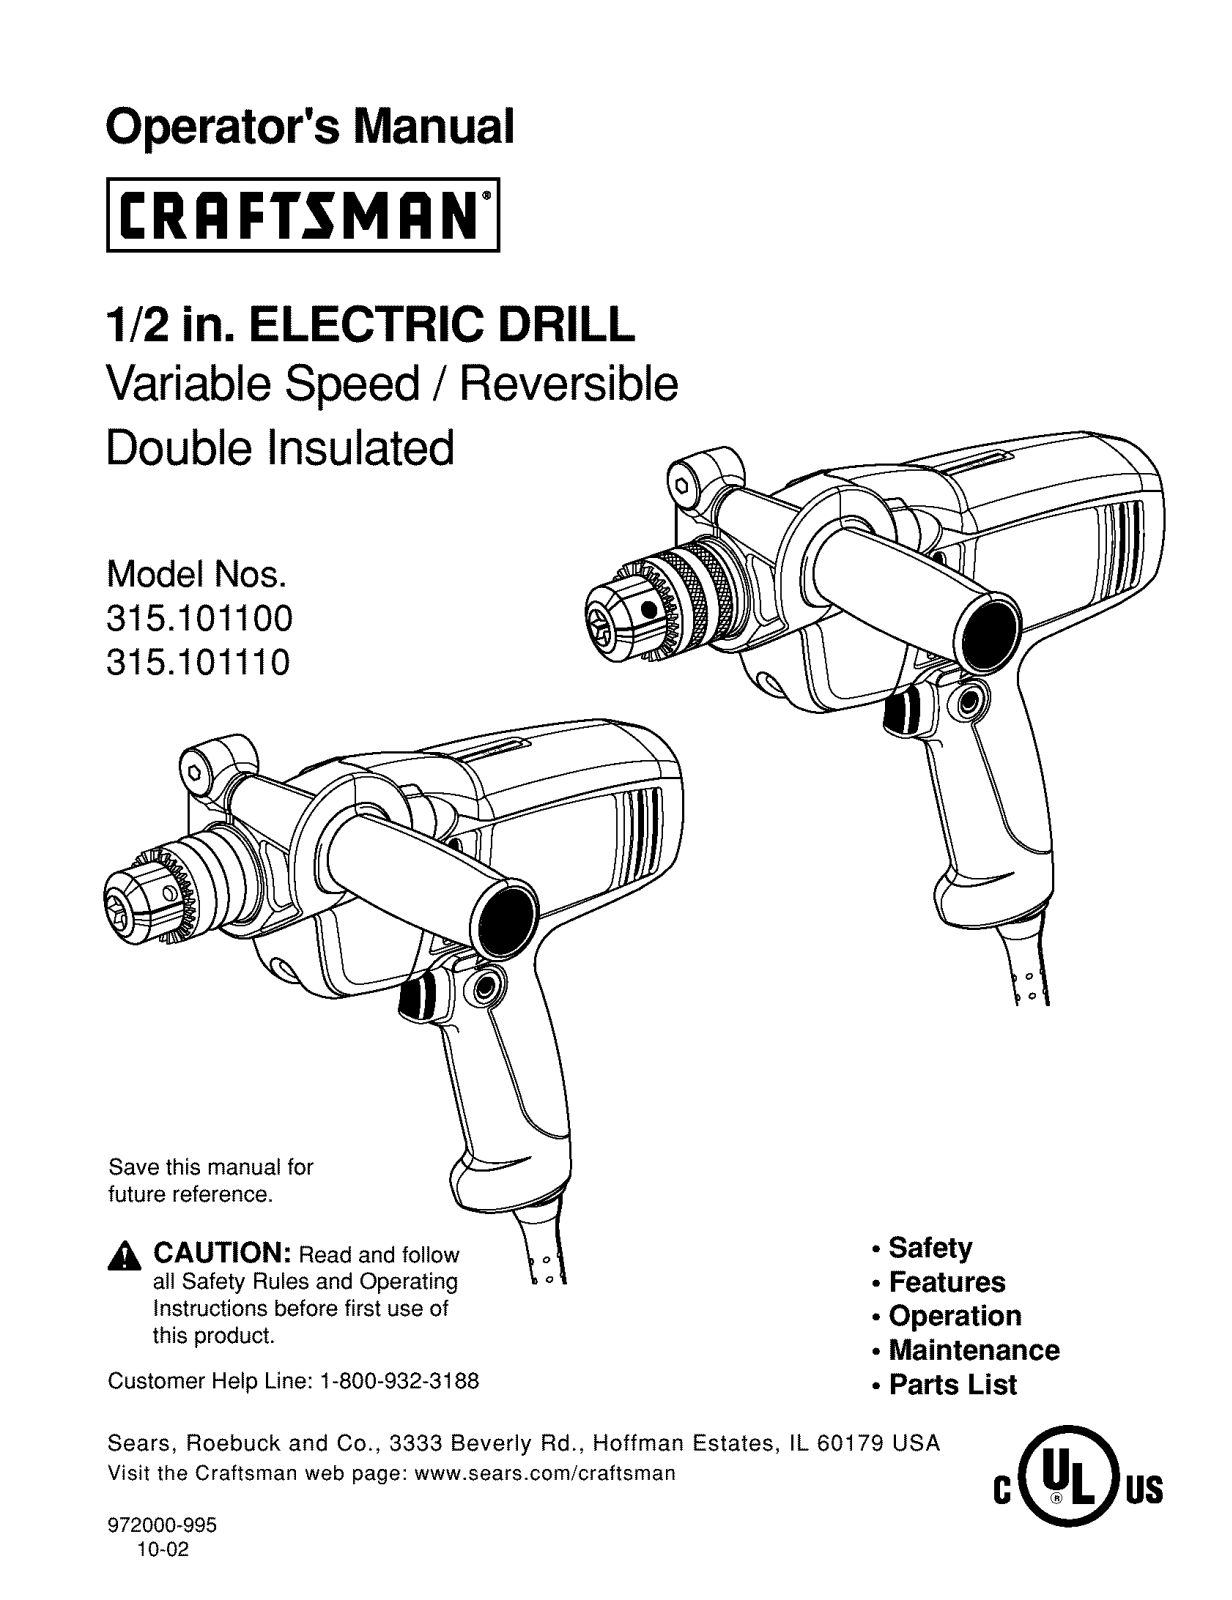 Craftsman 315101110, 315101100 Owner’s Manual